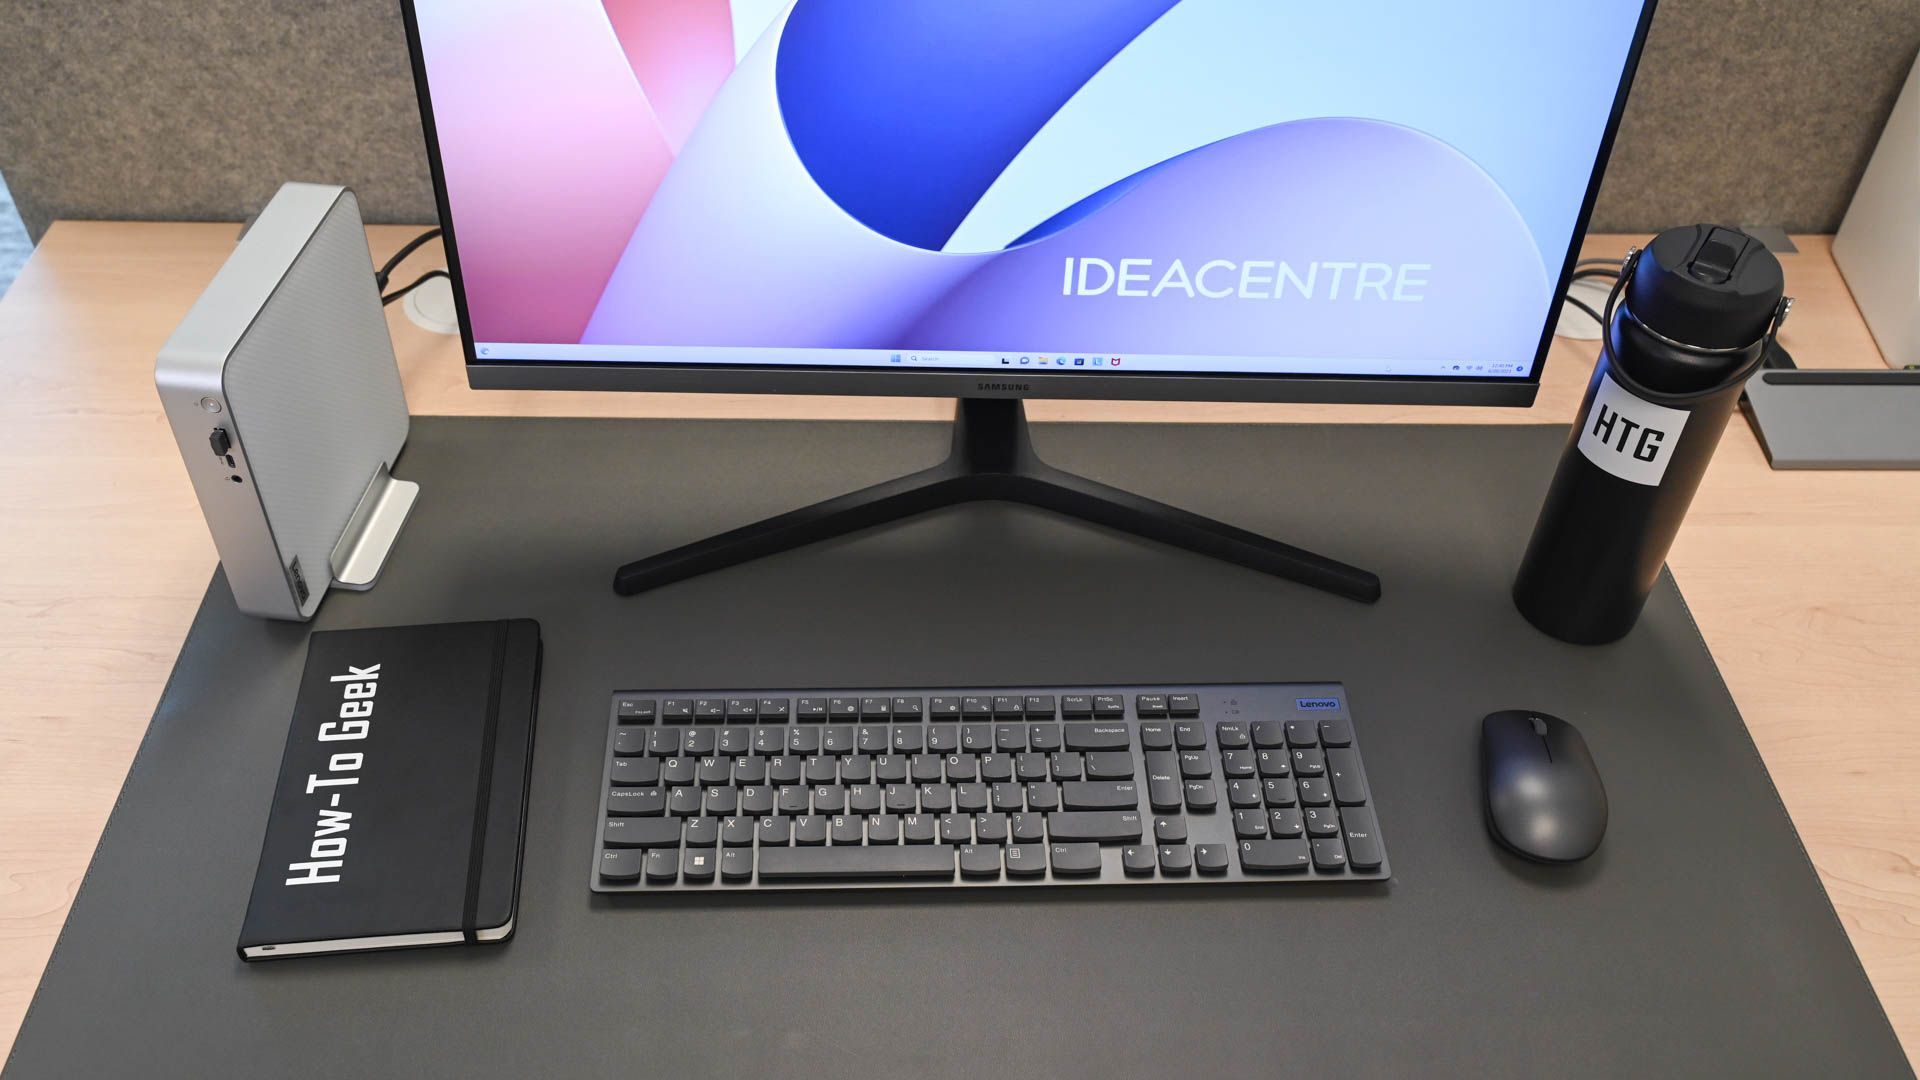 Lenovo IdeaCentre Mini set up with a monitor